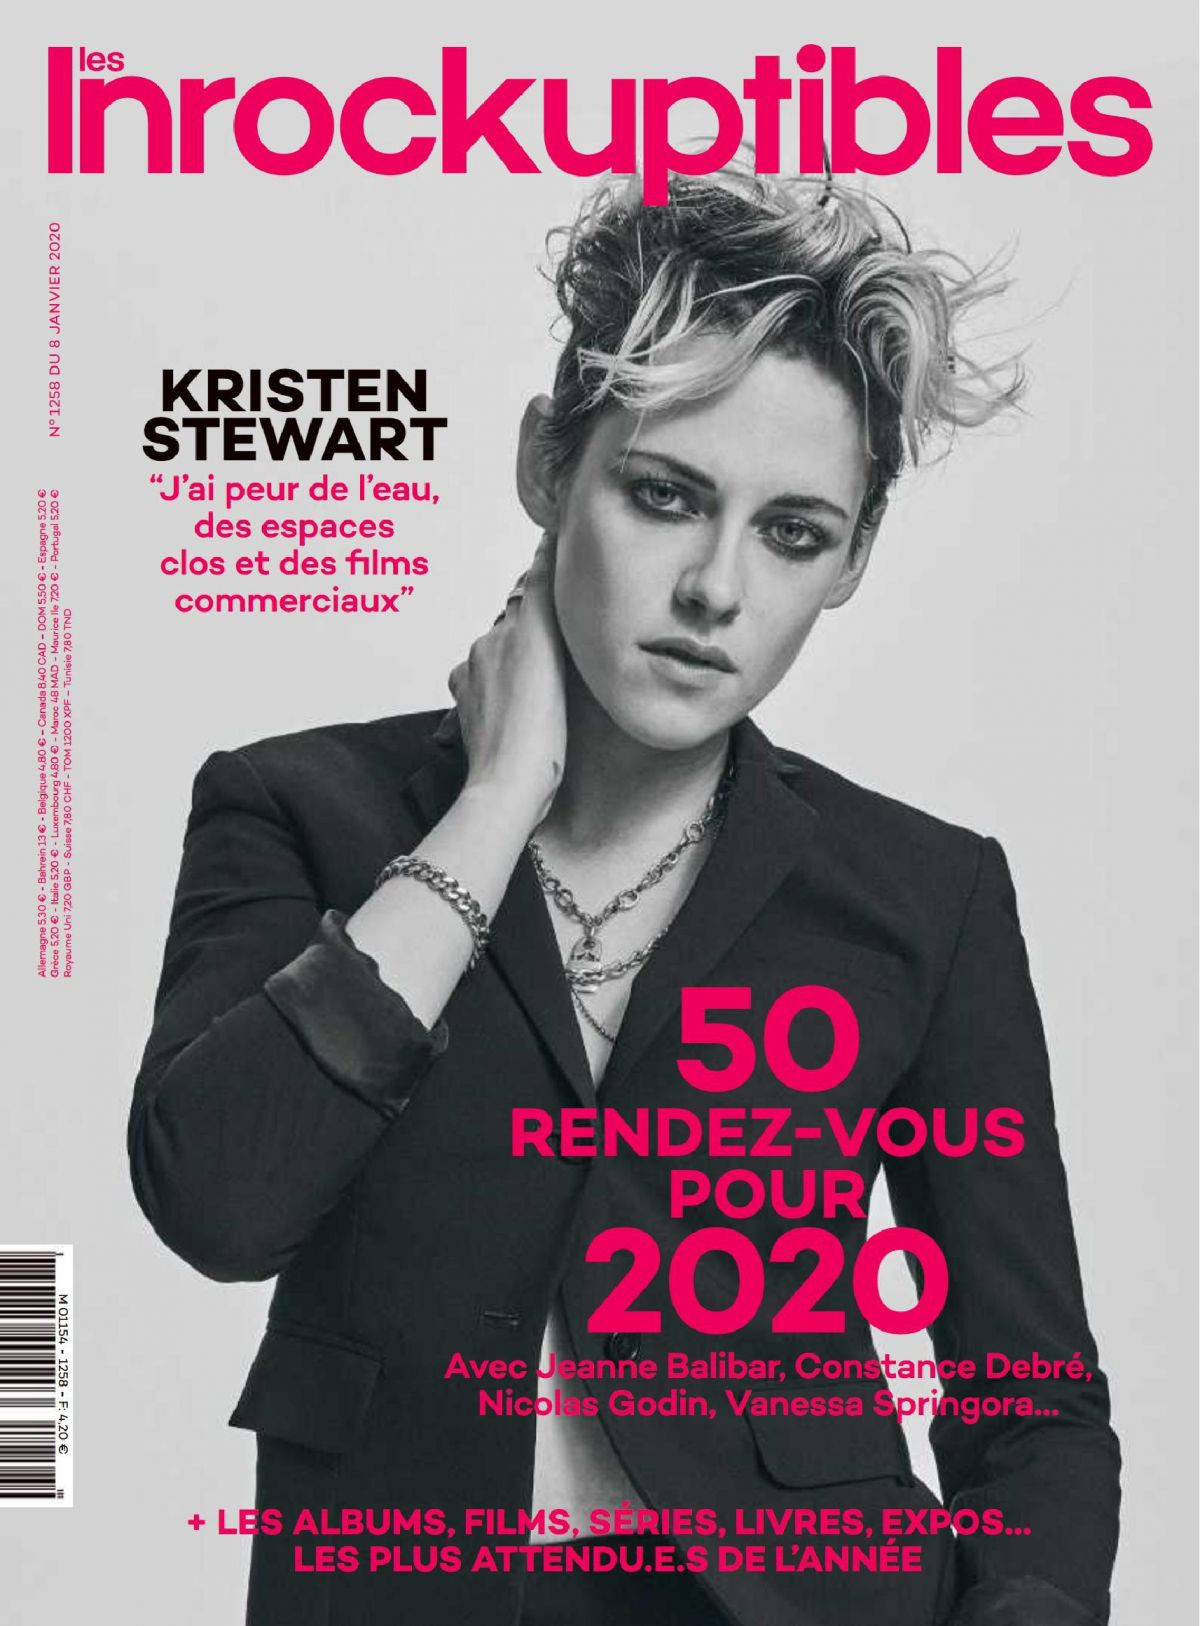 Кристен Стюарт (Kristen Stewart)